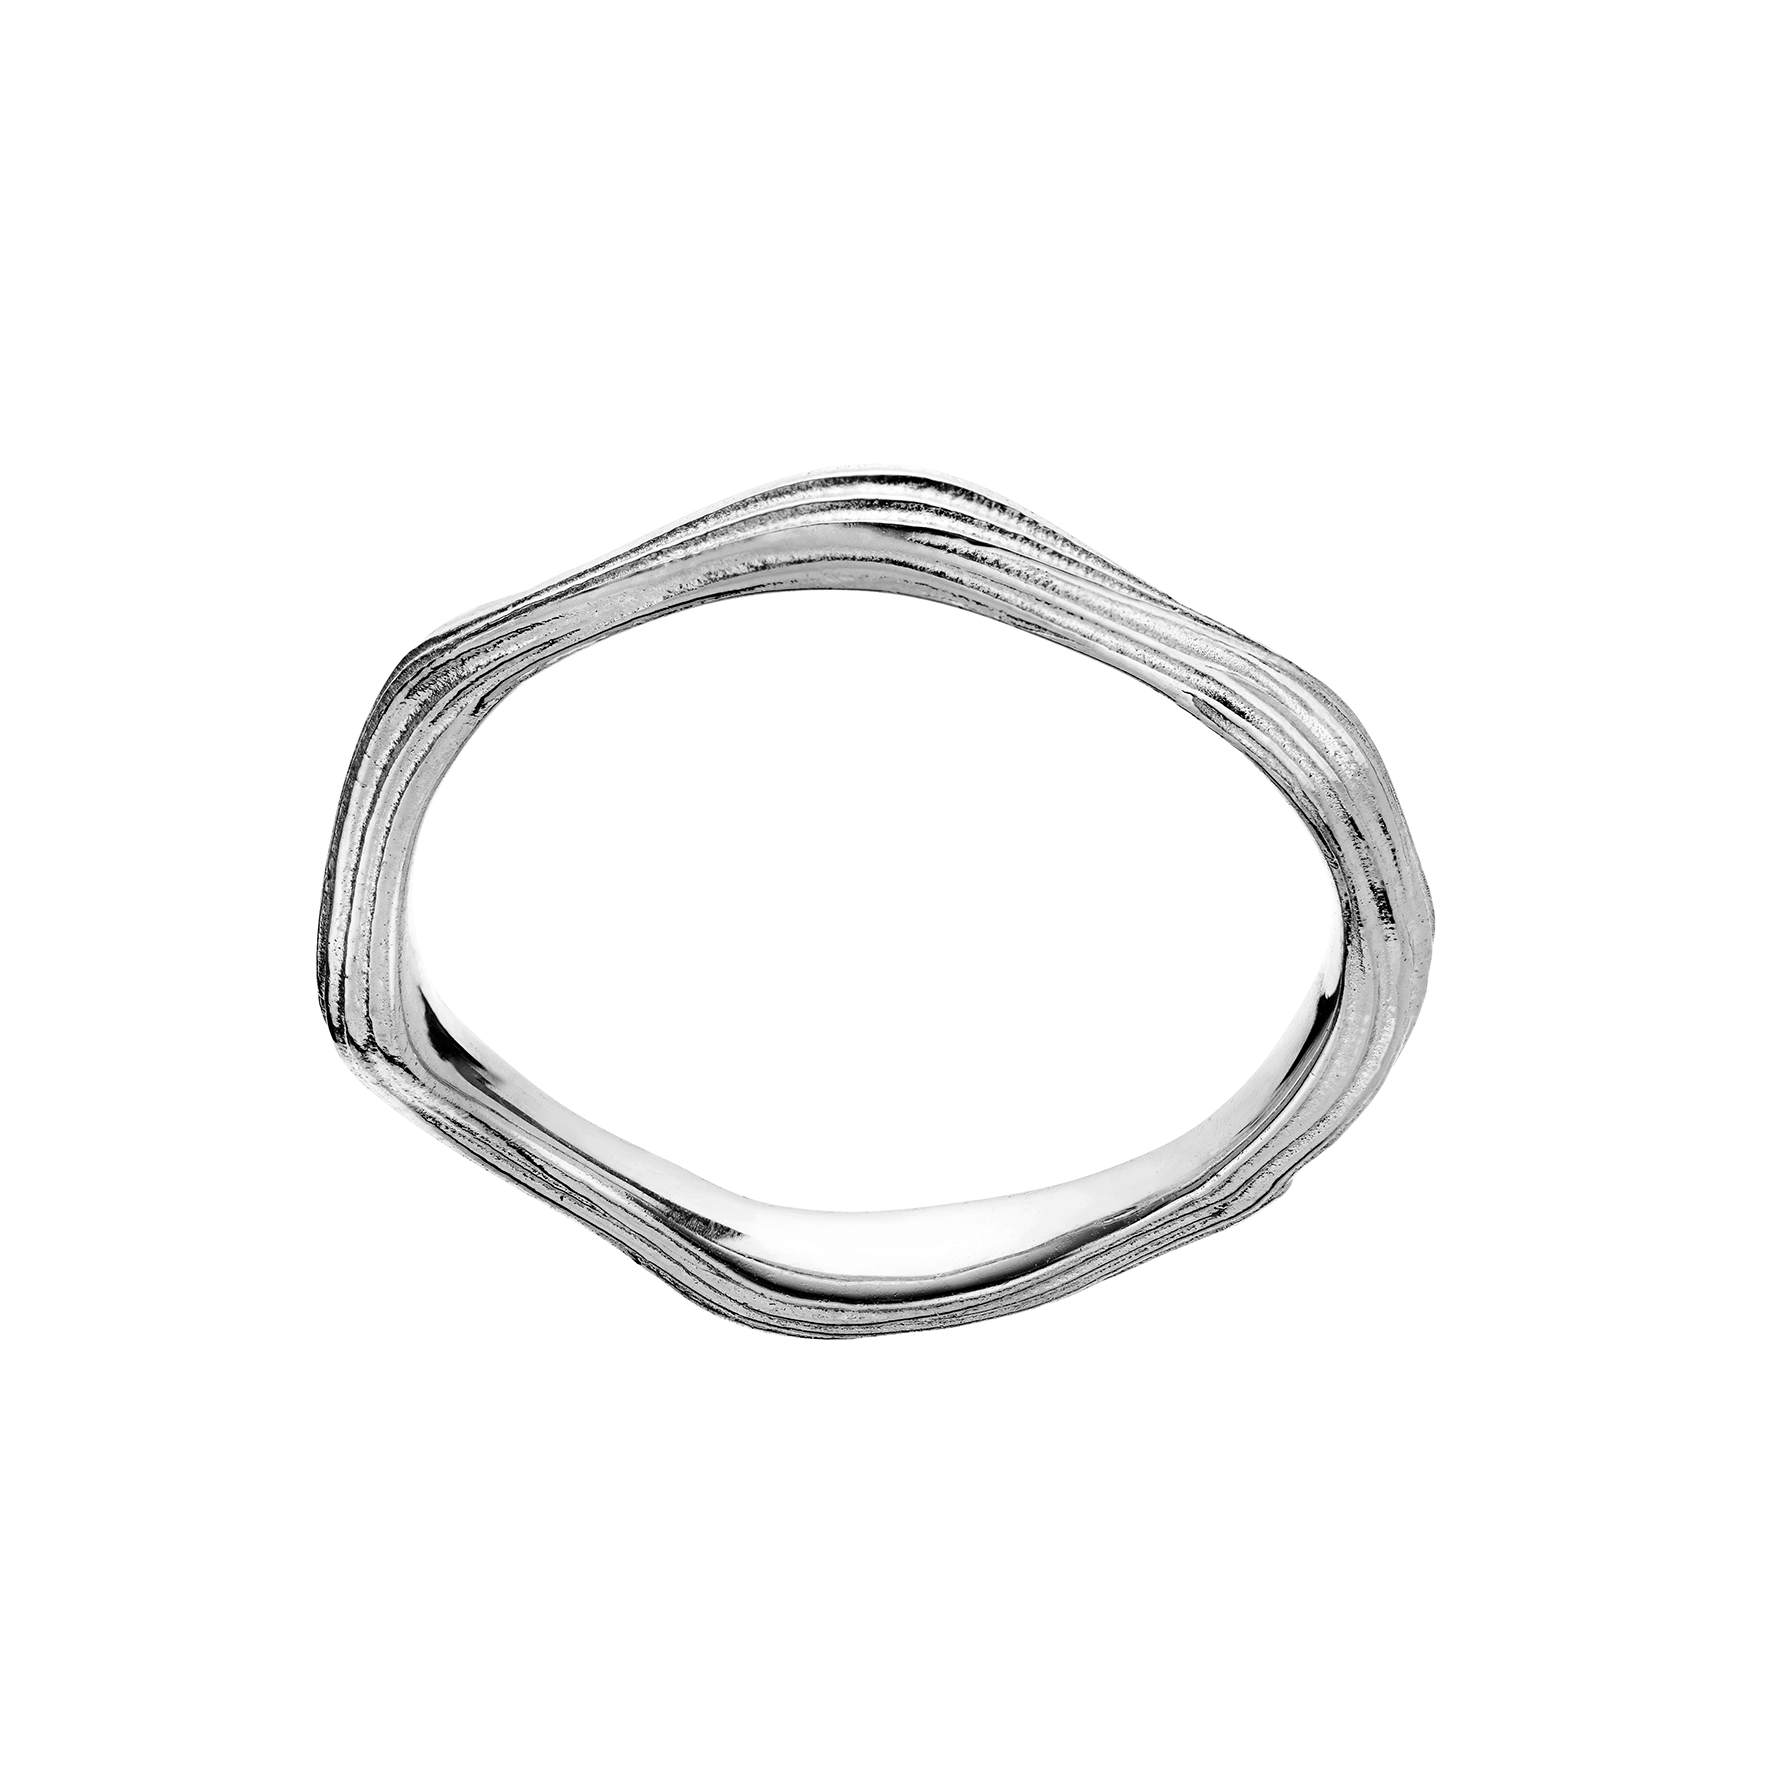 Rita Ring von Maanesten in Silber Sterling 925